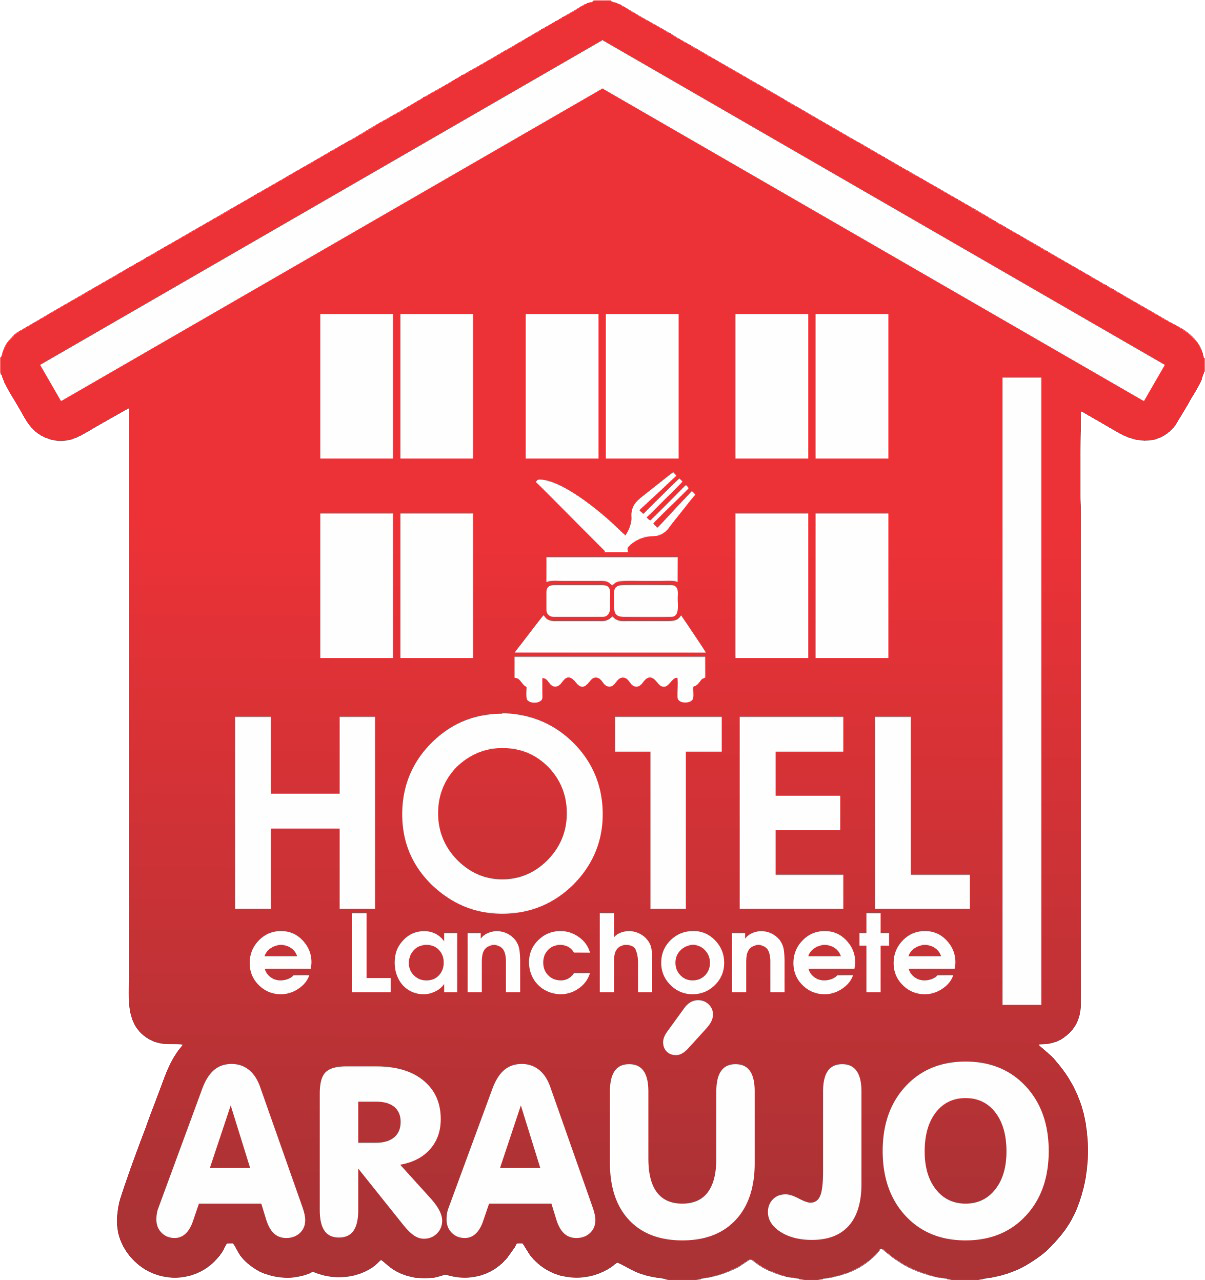 Hotel Araújo